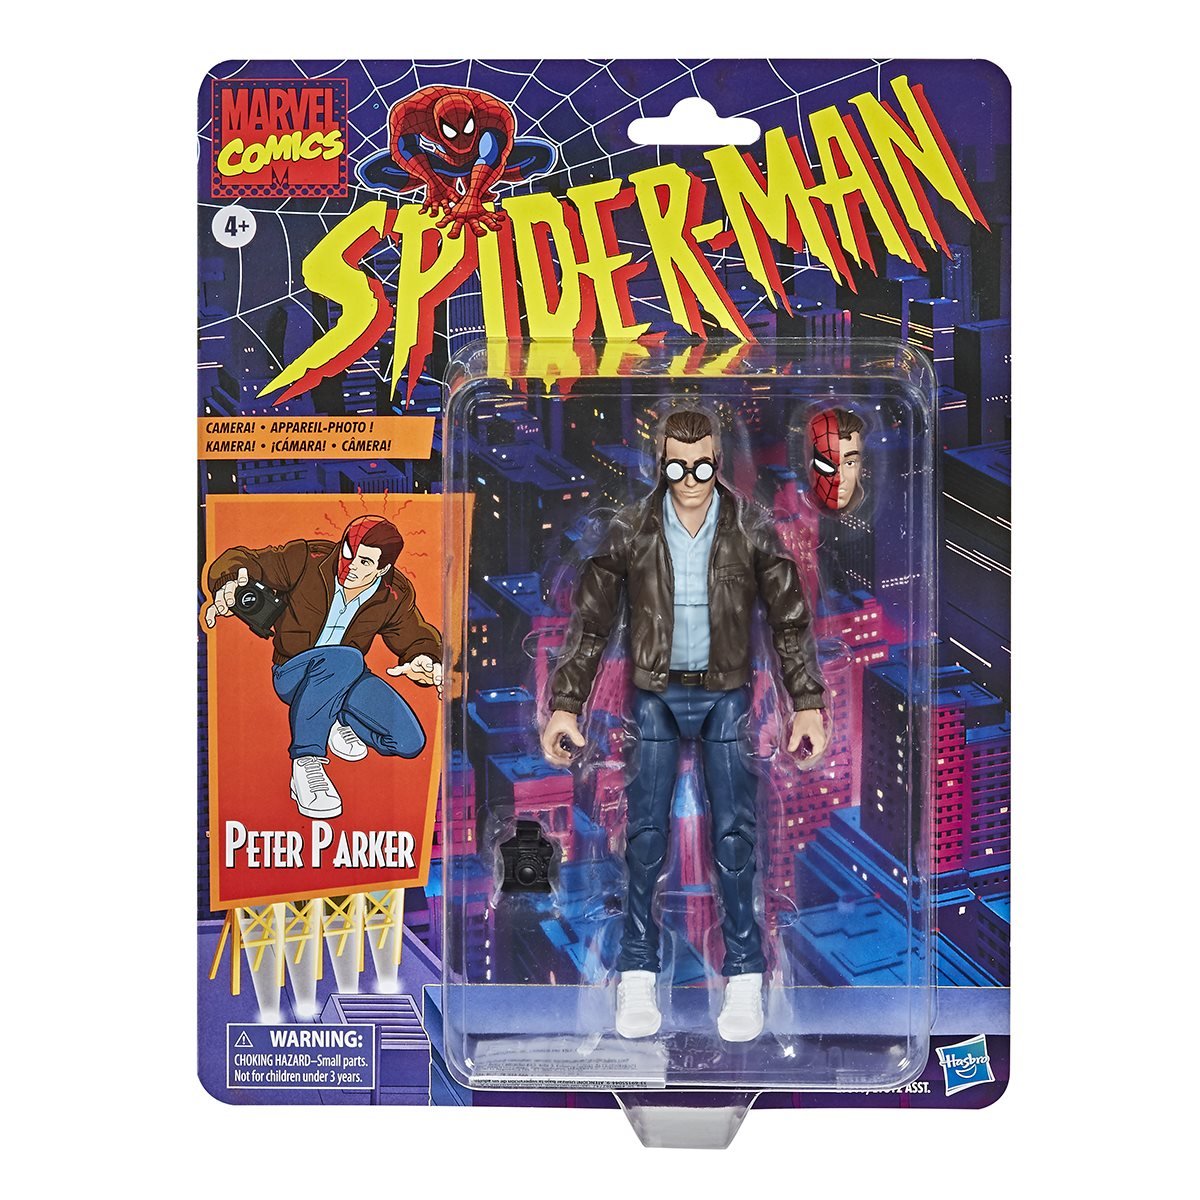 6 inch spiderman action figures